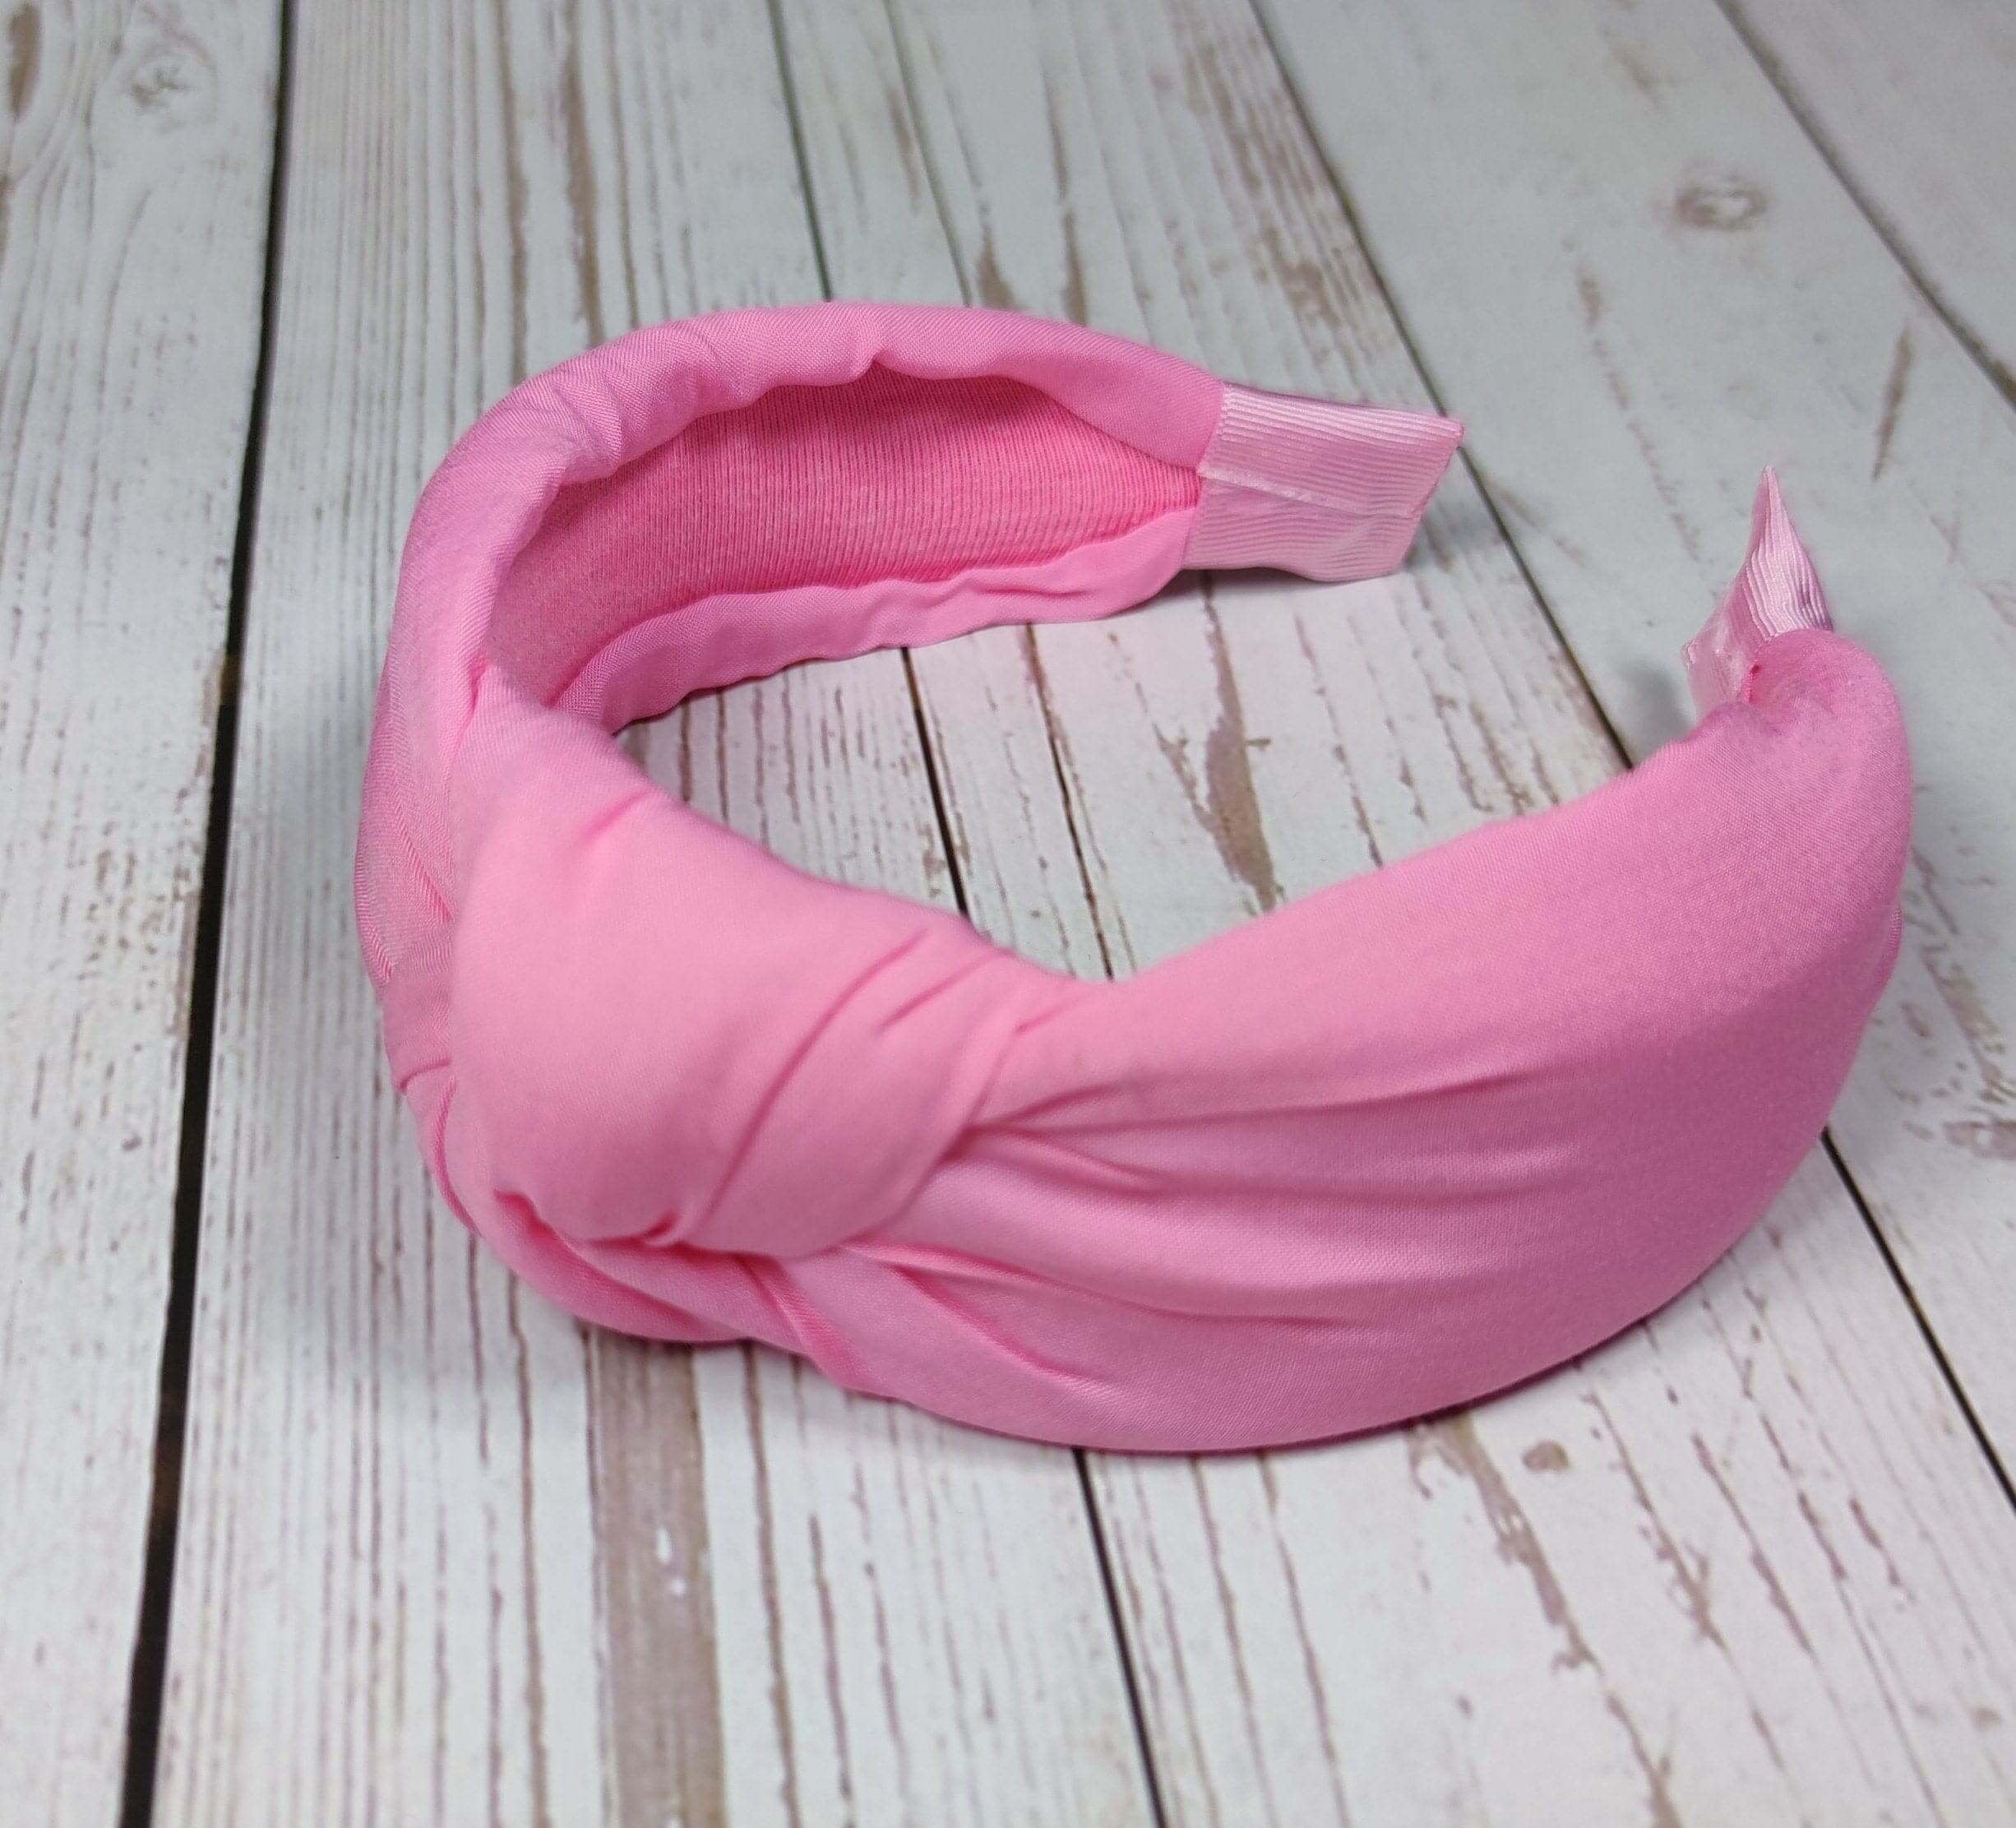 Light Pink Fashion Twist Headband - A classic, feminine headband in baby pink. Made with soft, comfortable viscose crepe.